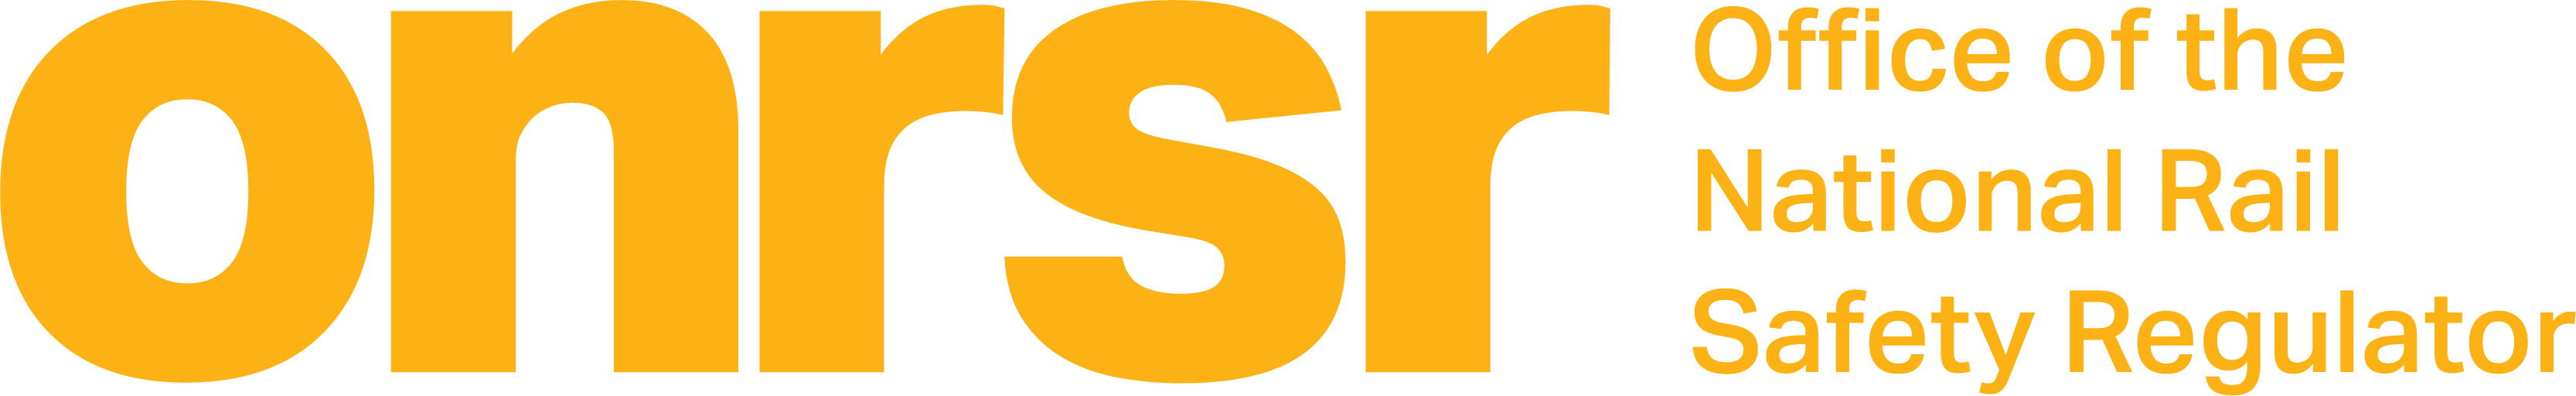 DIGITAL logo w Name Yellow png